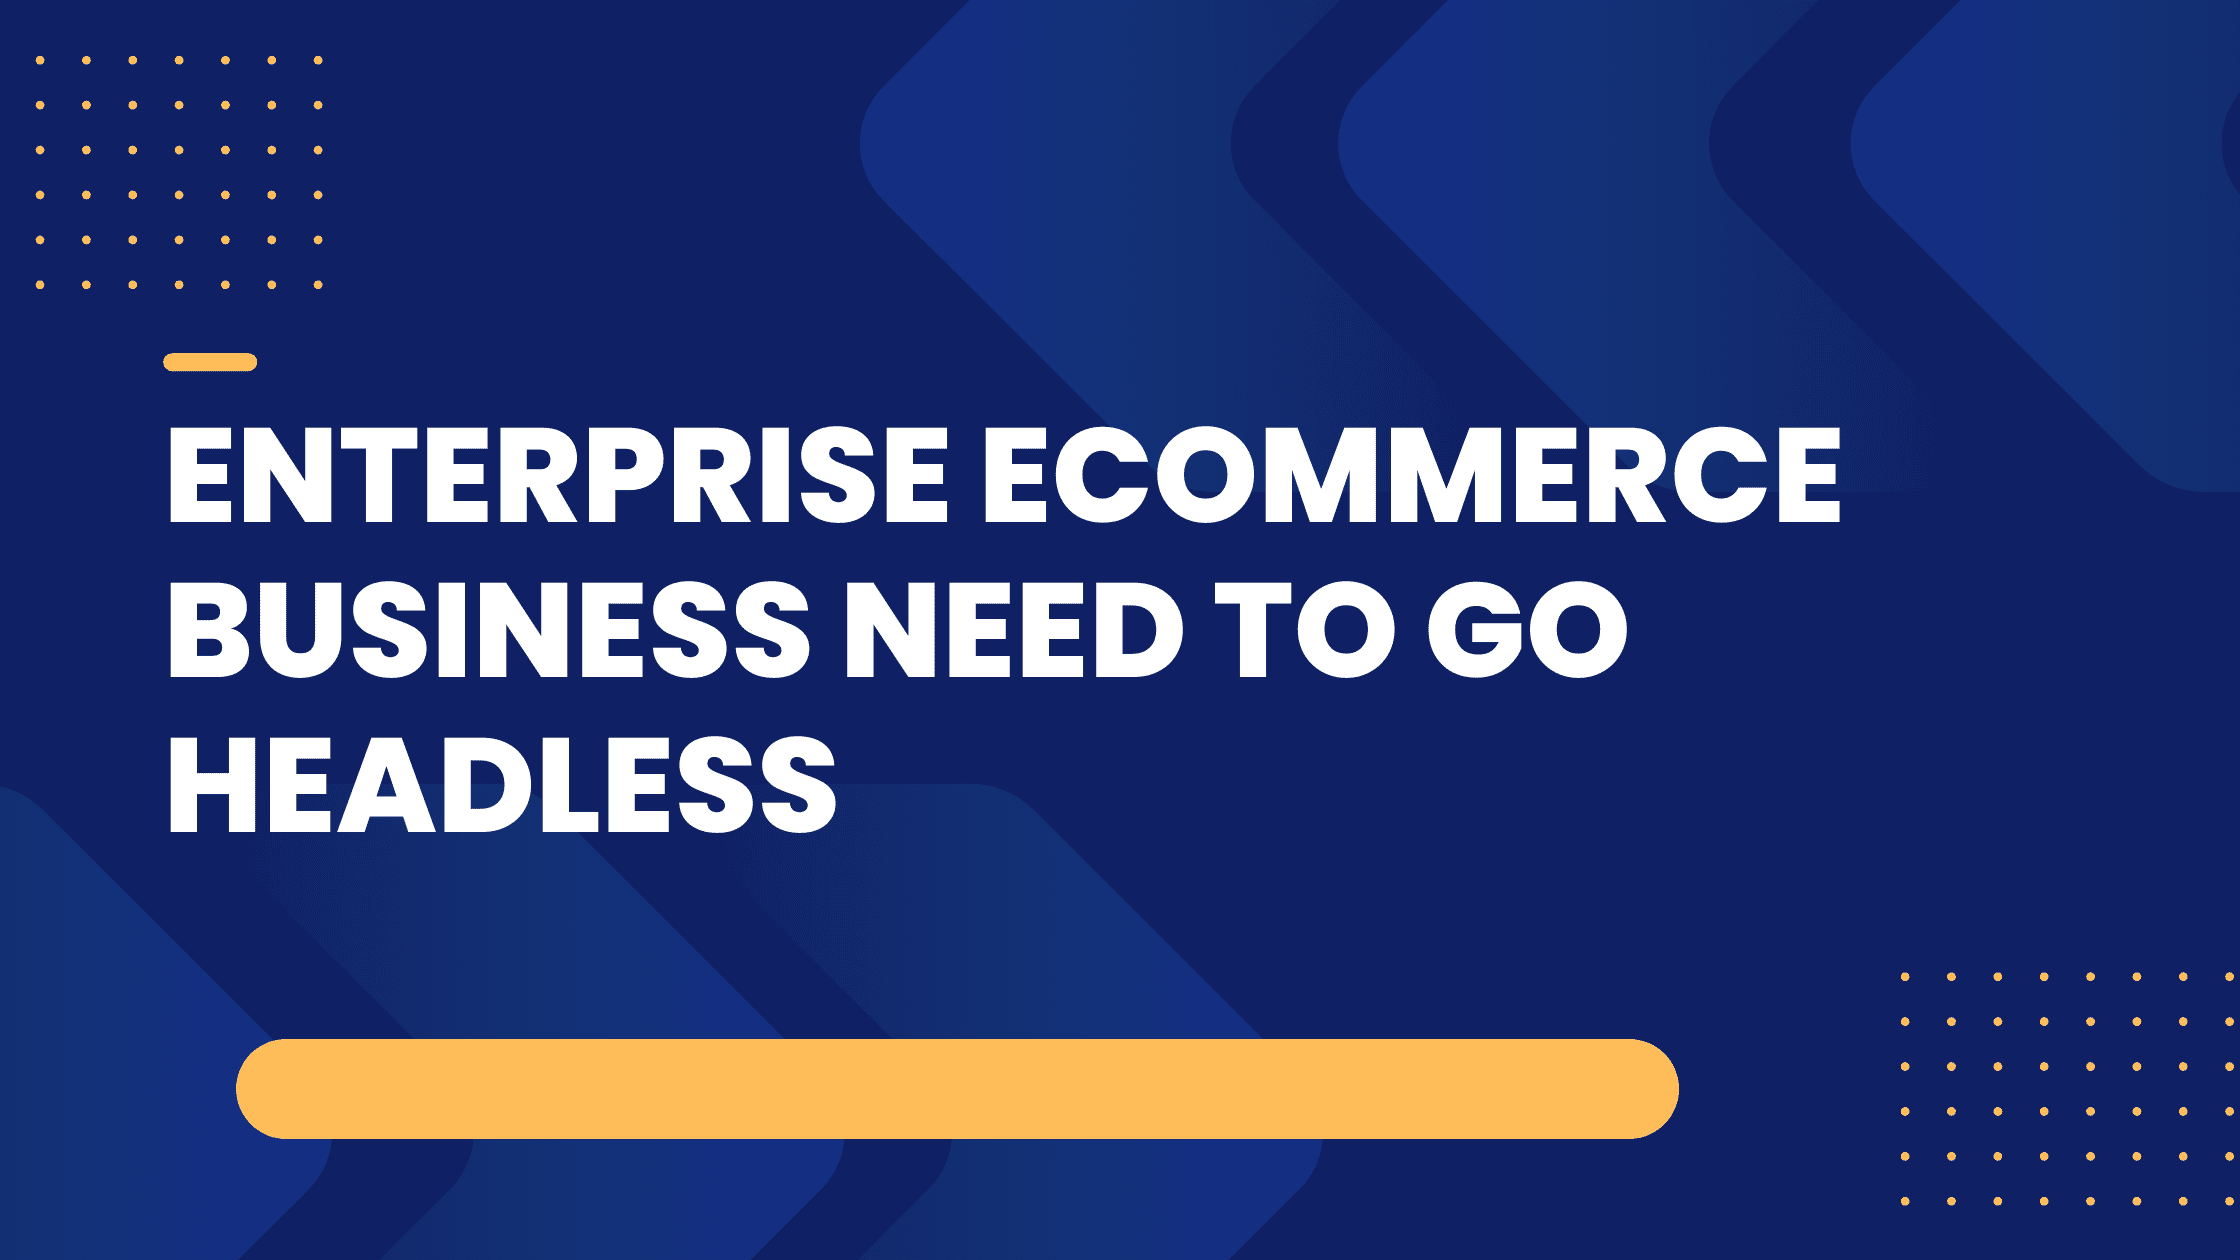 Enterprise ecommerce business software